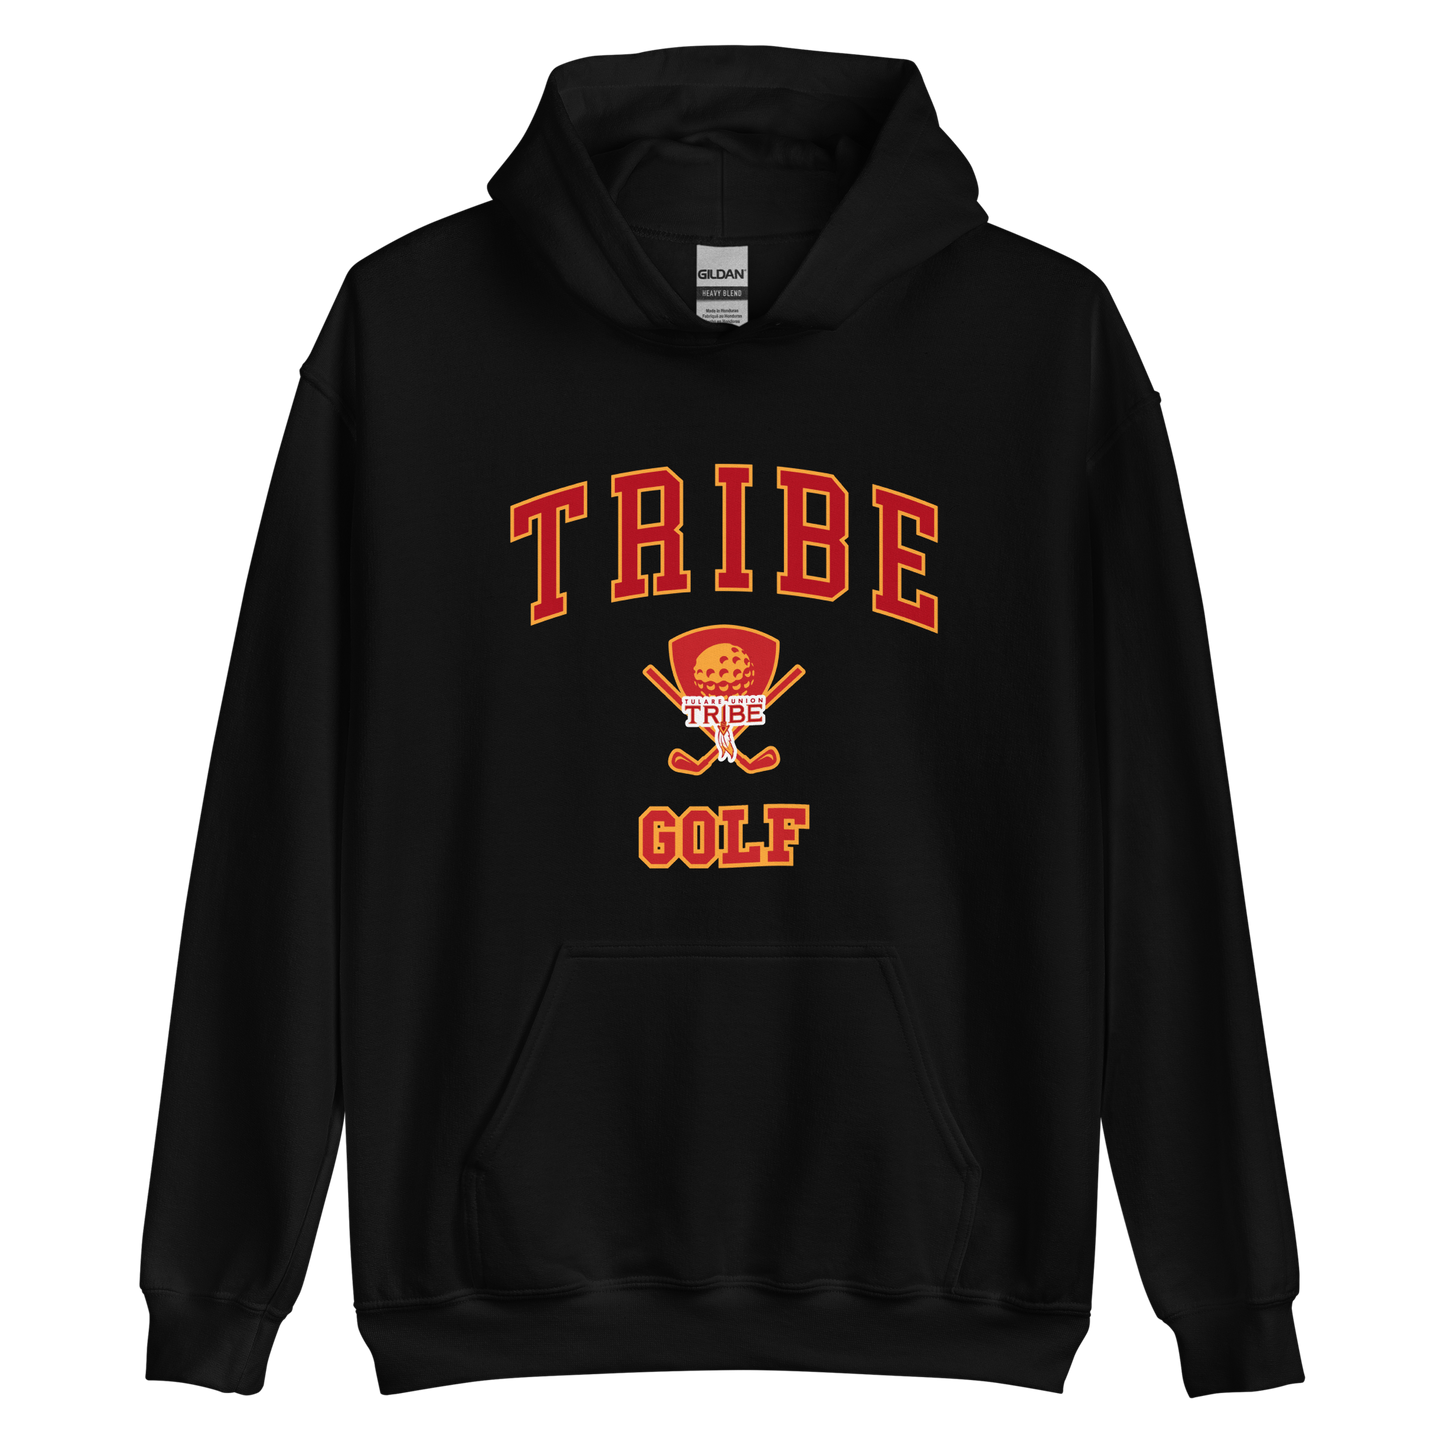 Tribe Golf Unisex Hoodie